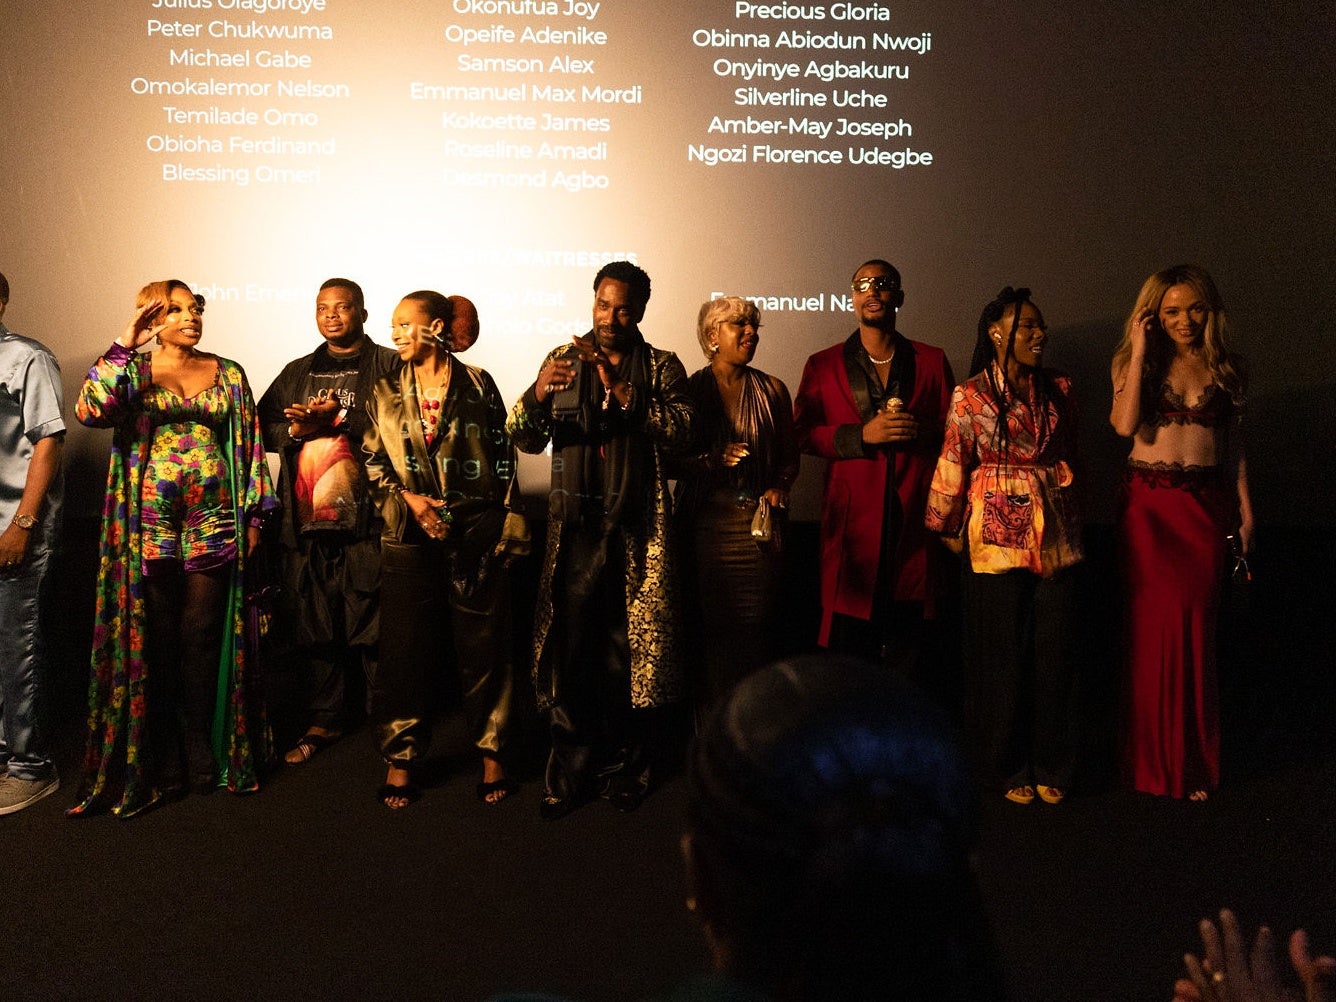 Take A Peek Inside The Movie Premiere Of EbonyLife’s “A Sunday Affair” In Lagos, Nigeria